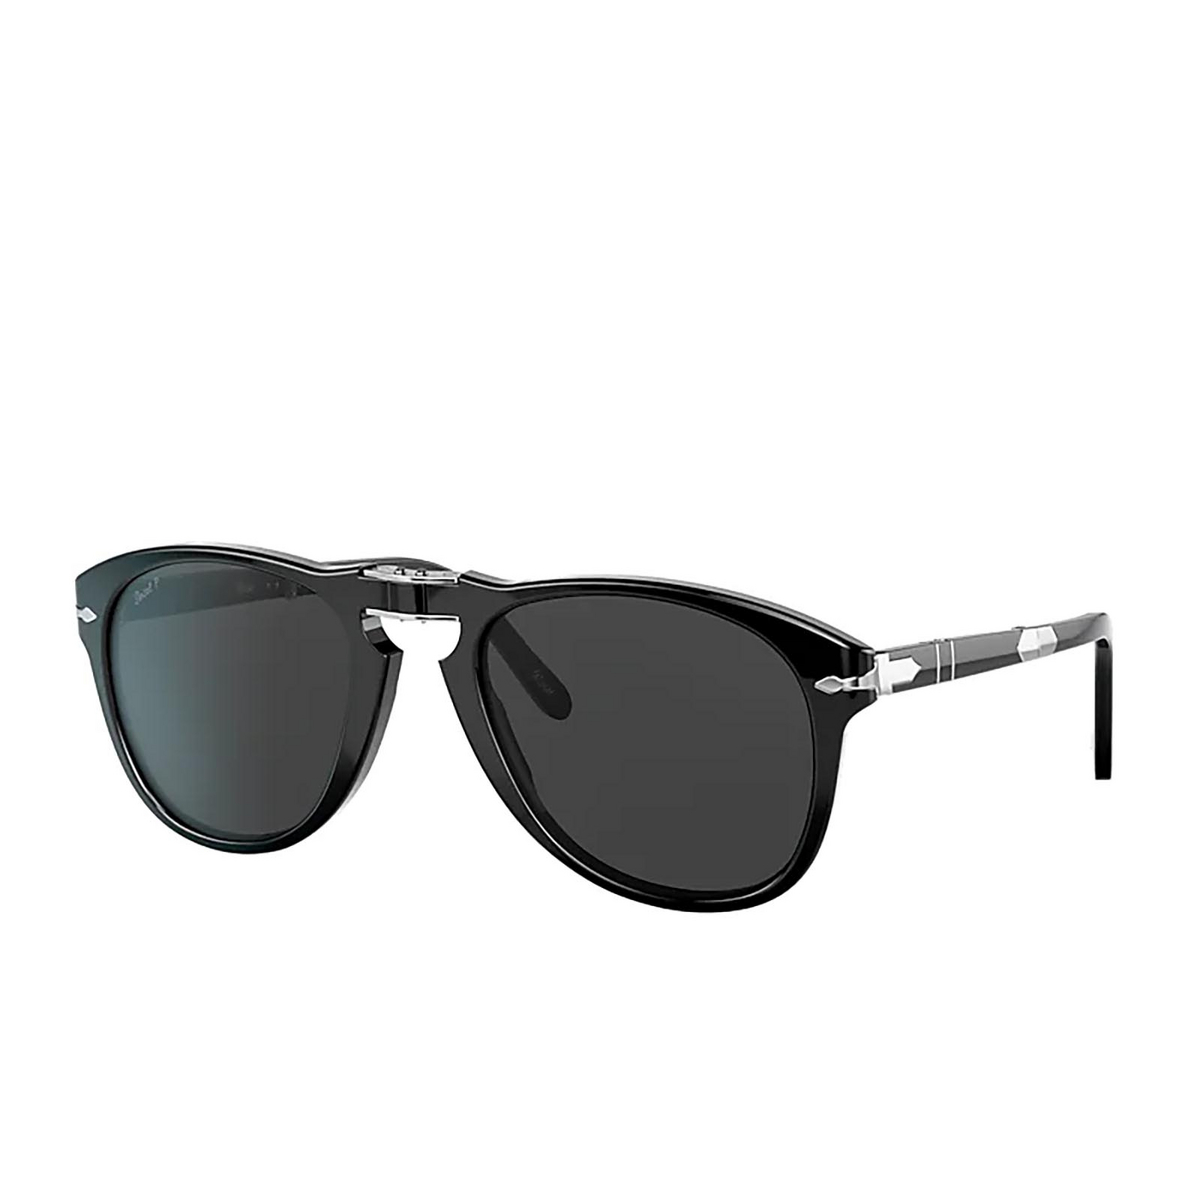 Persol STEVE MCQUEEN Sunglasses 95/48 Black - three-quarters view